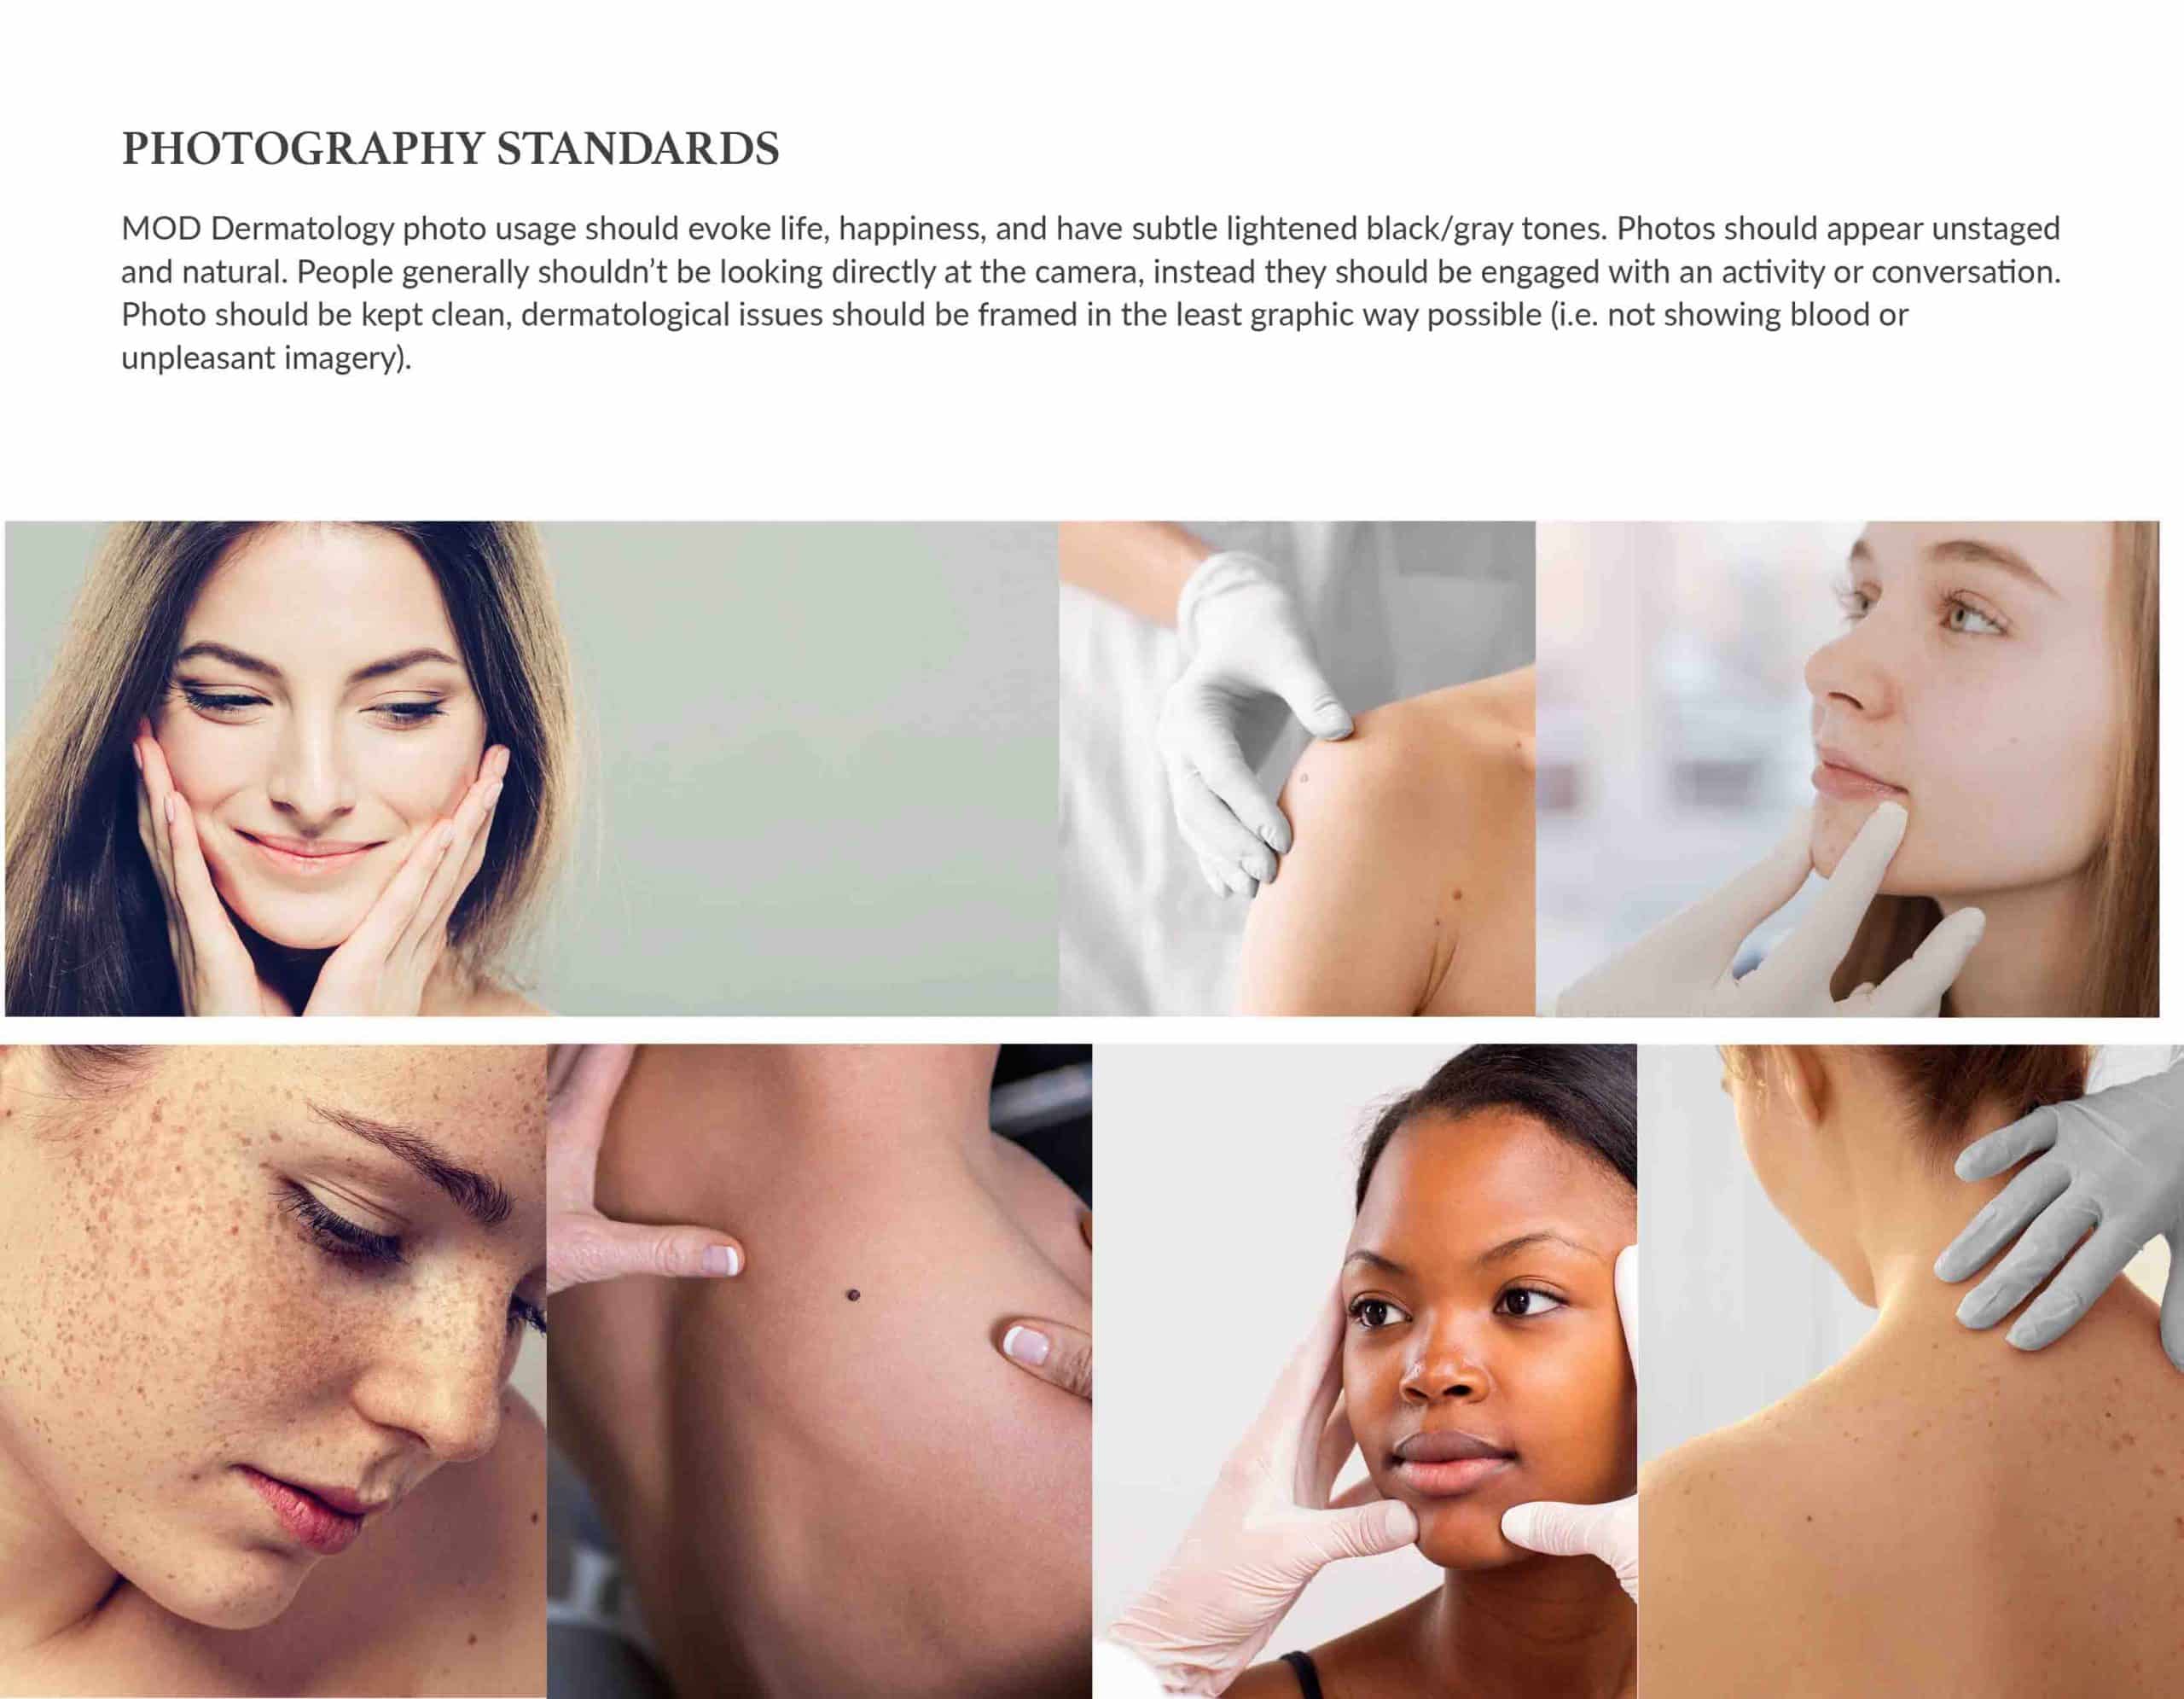 MOD Dermatology Brand Guide - Photography